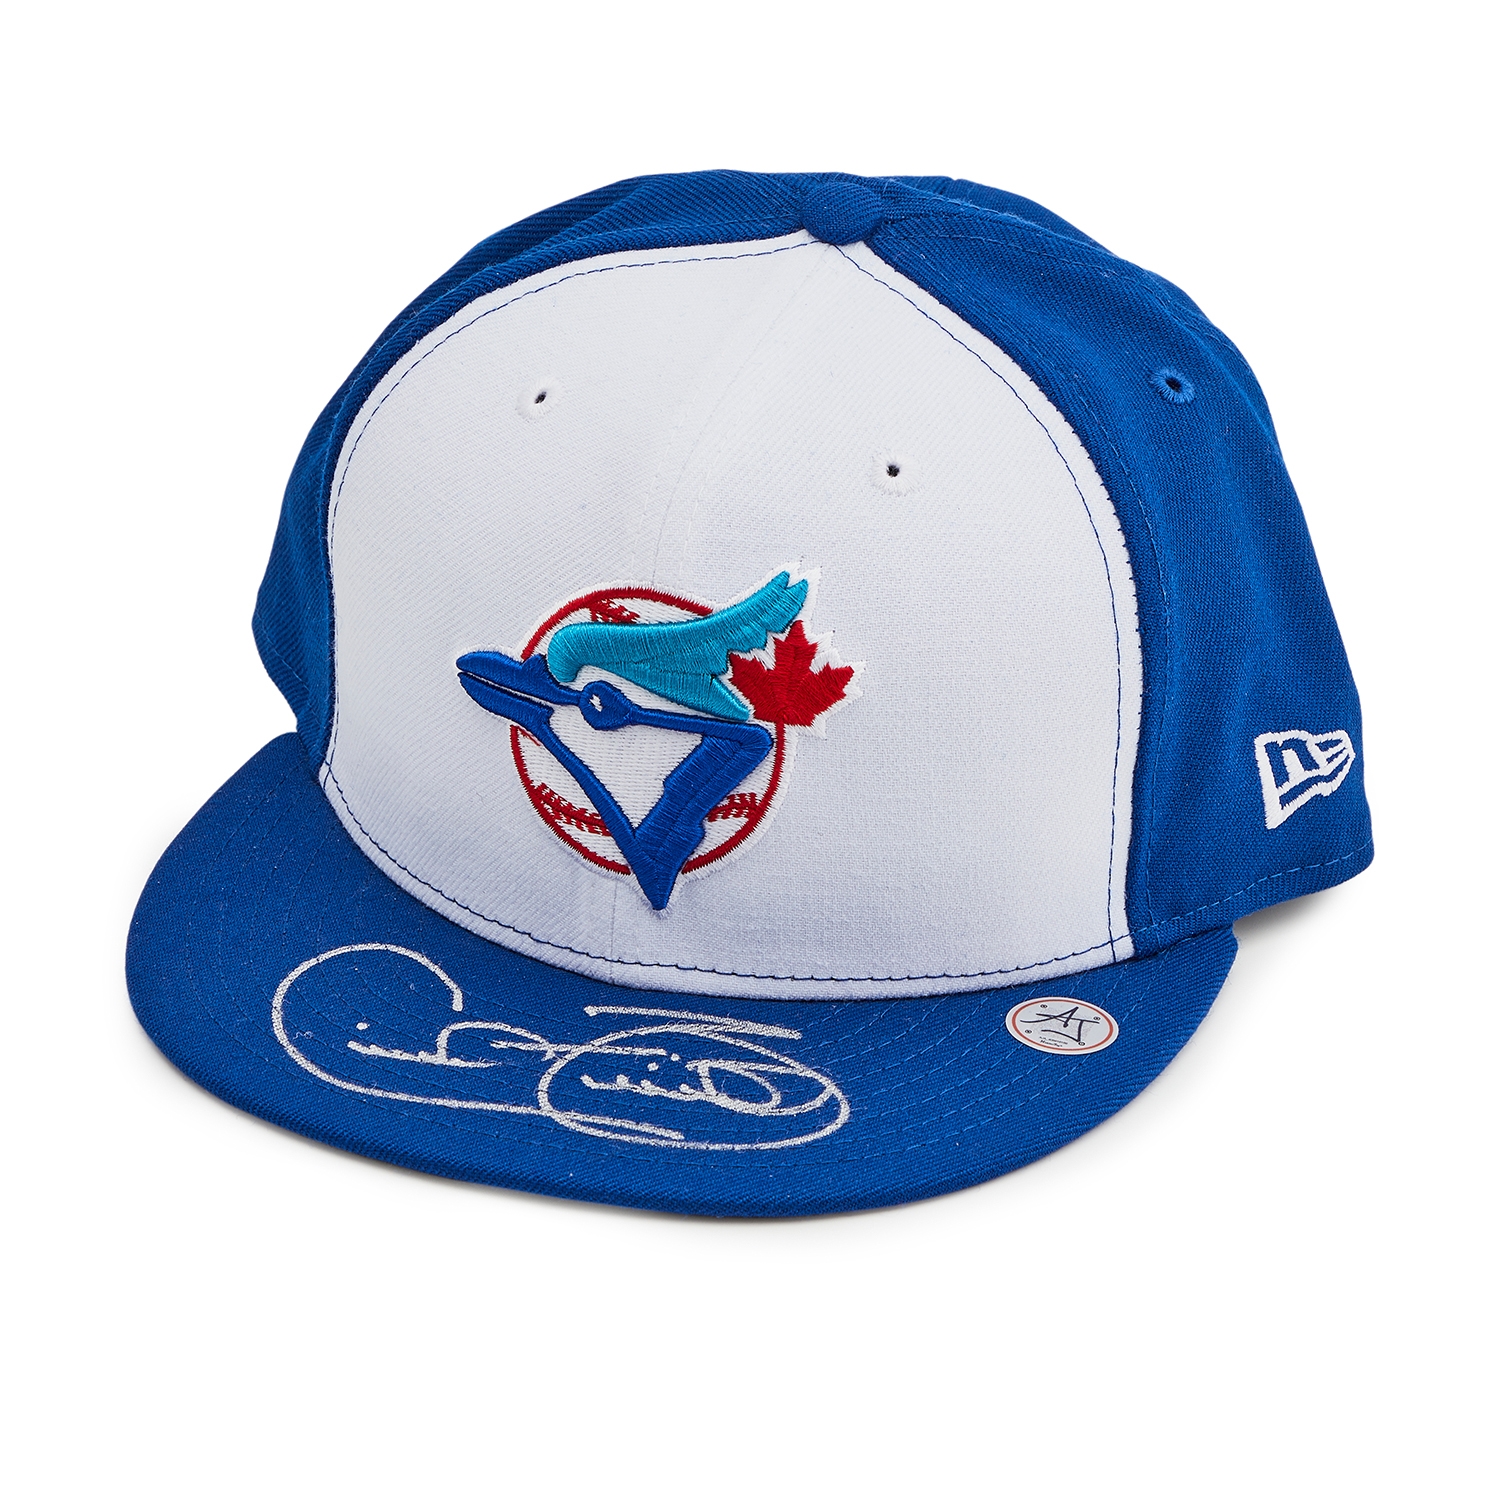 Cecil Fielder Autographed Toronto Blue Jays New Era Baseball Cap